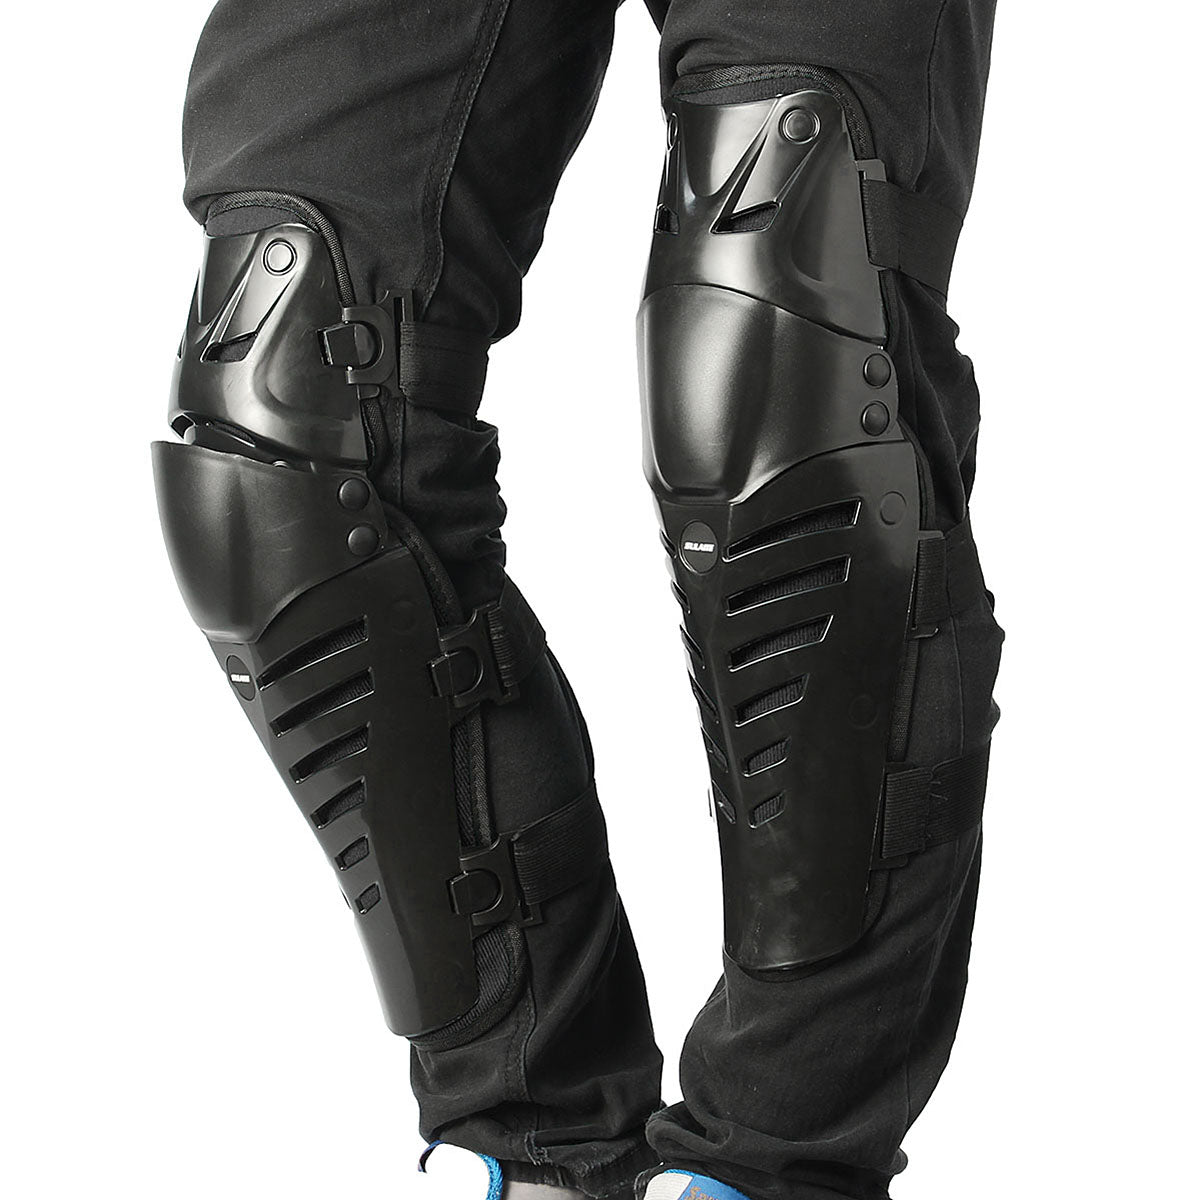 Motorcycle Safety Knee Pad Skateboard Motocross Racing Skiing Protective Gear